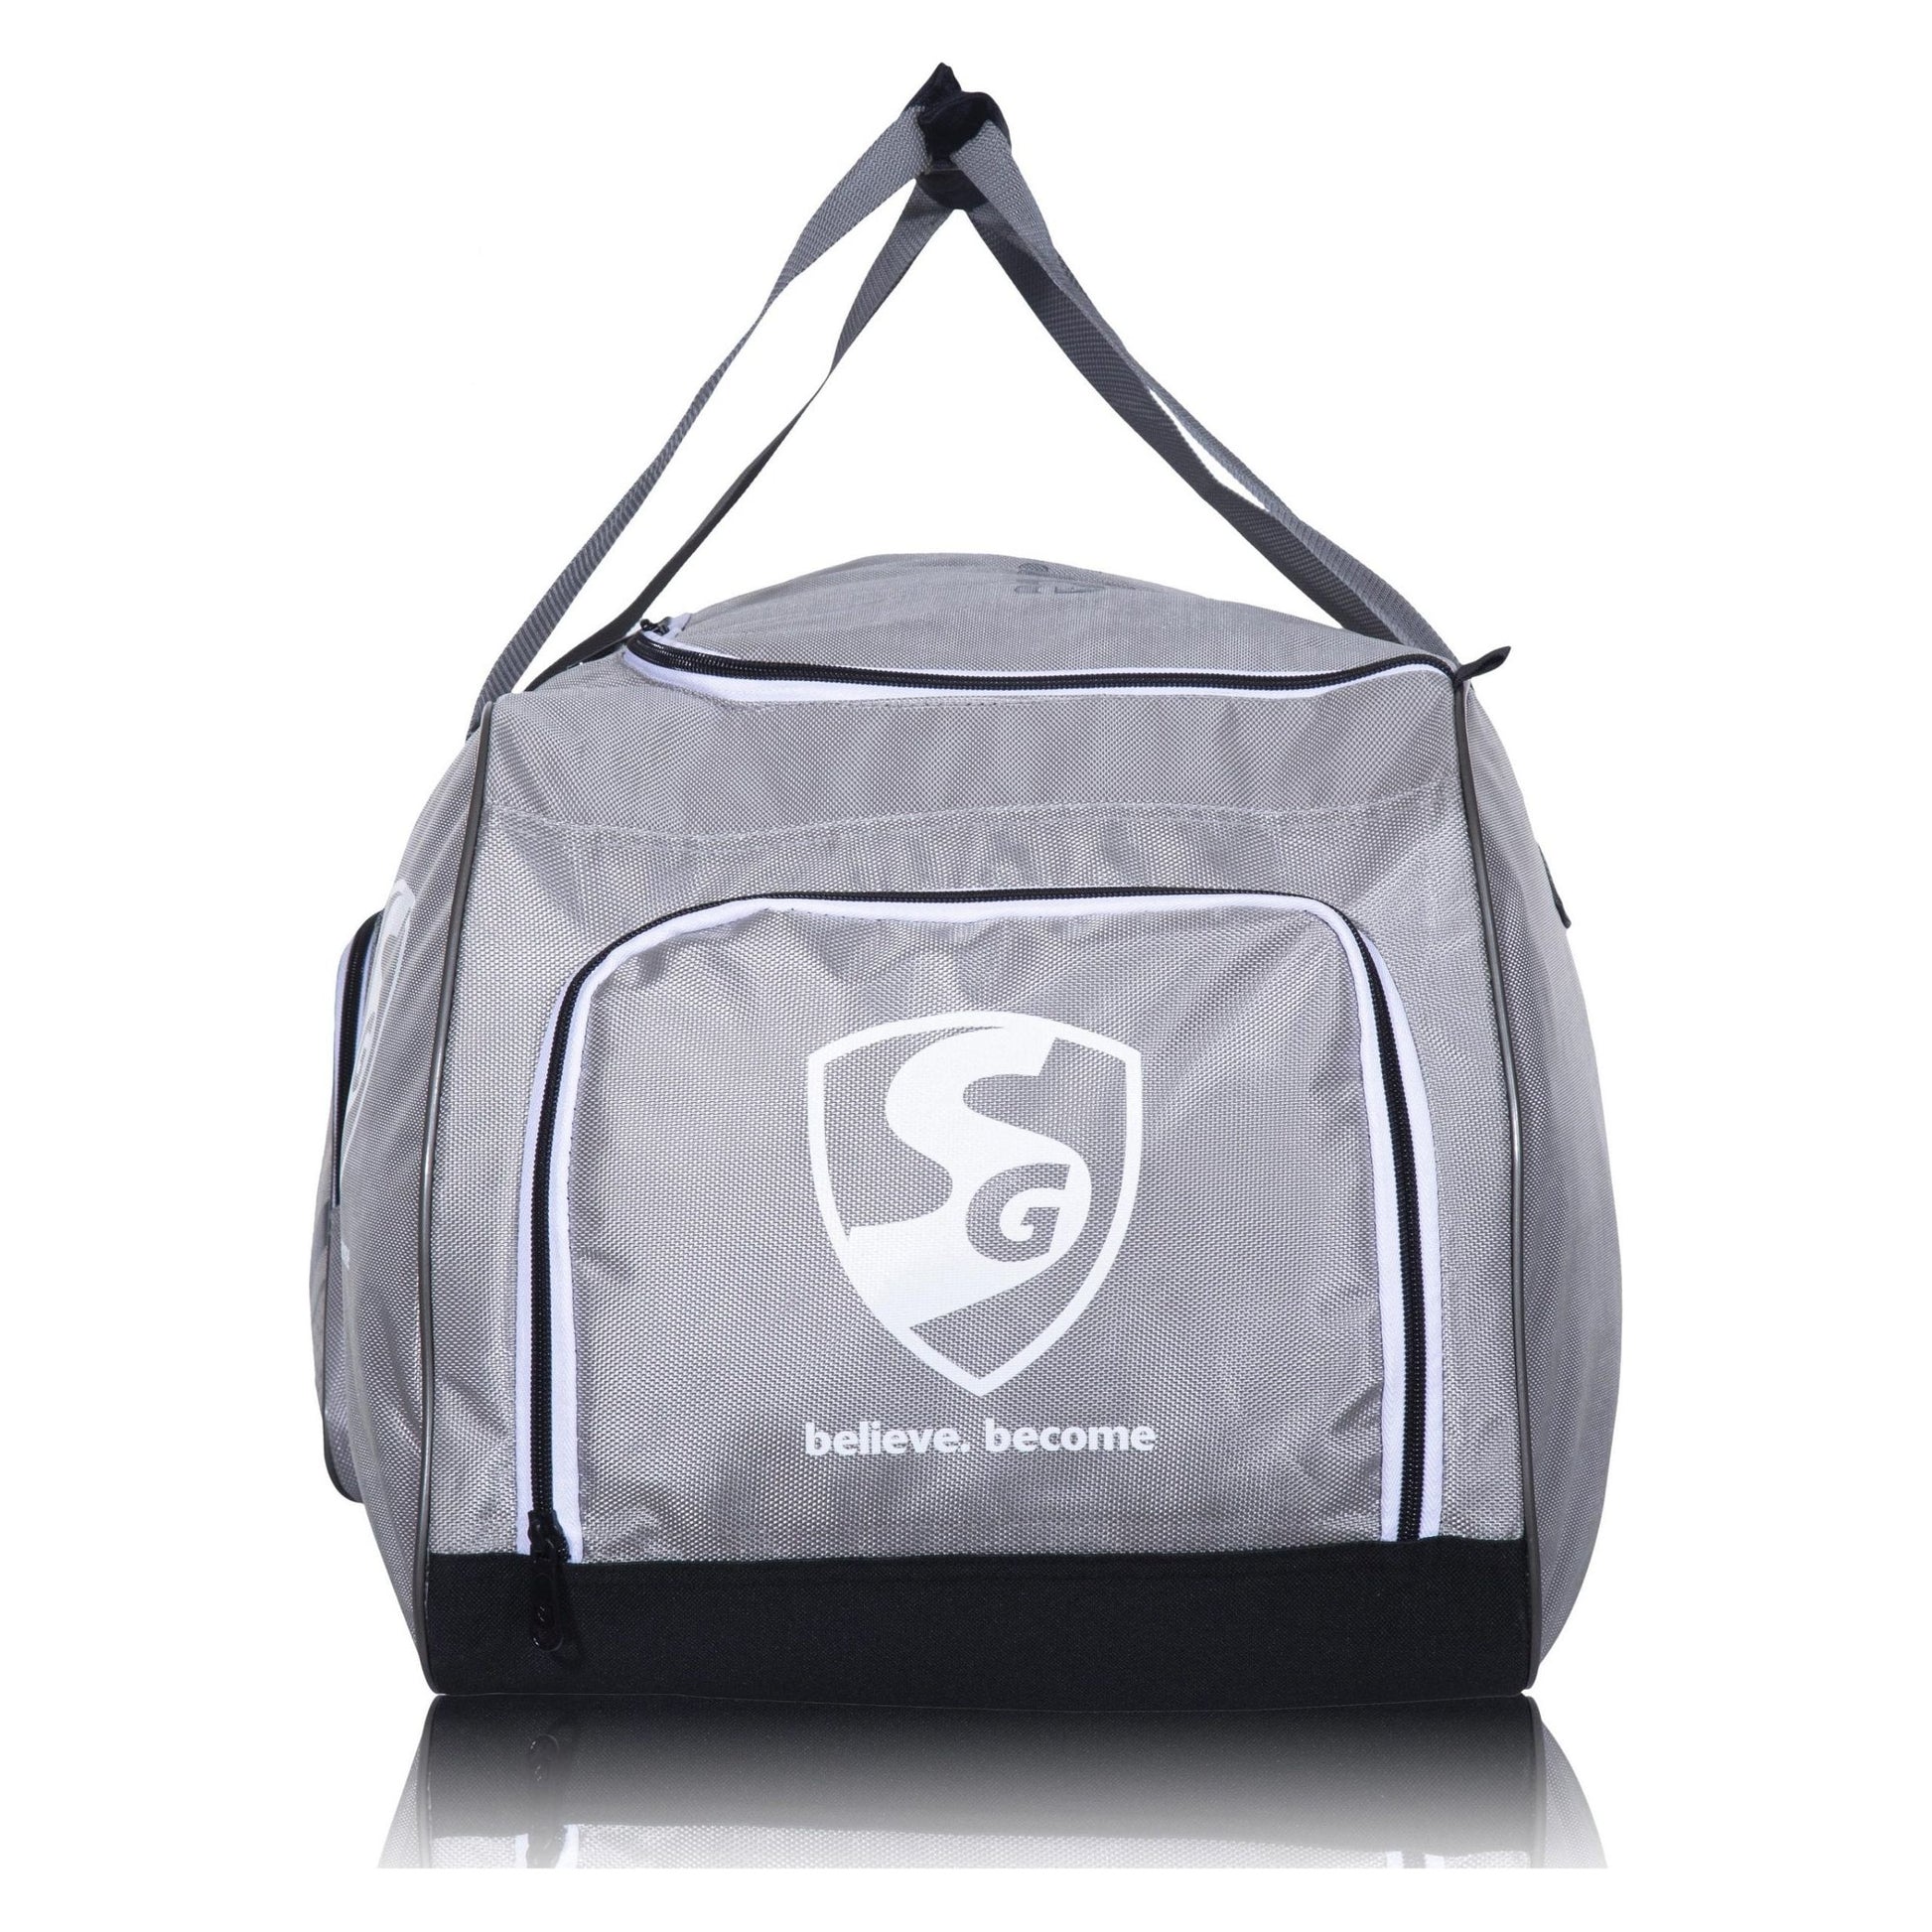 Kit Bag SG ASHES X2 KIT